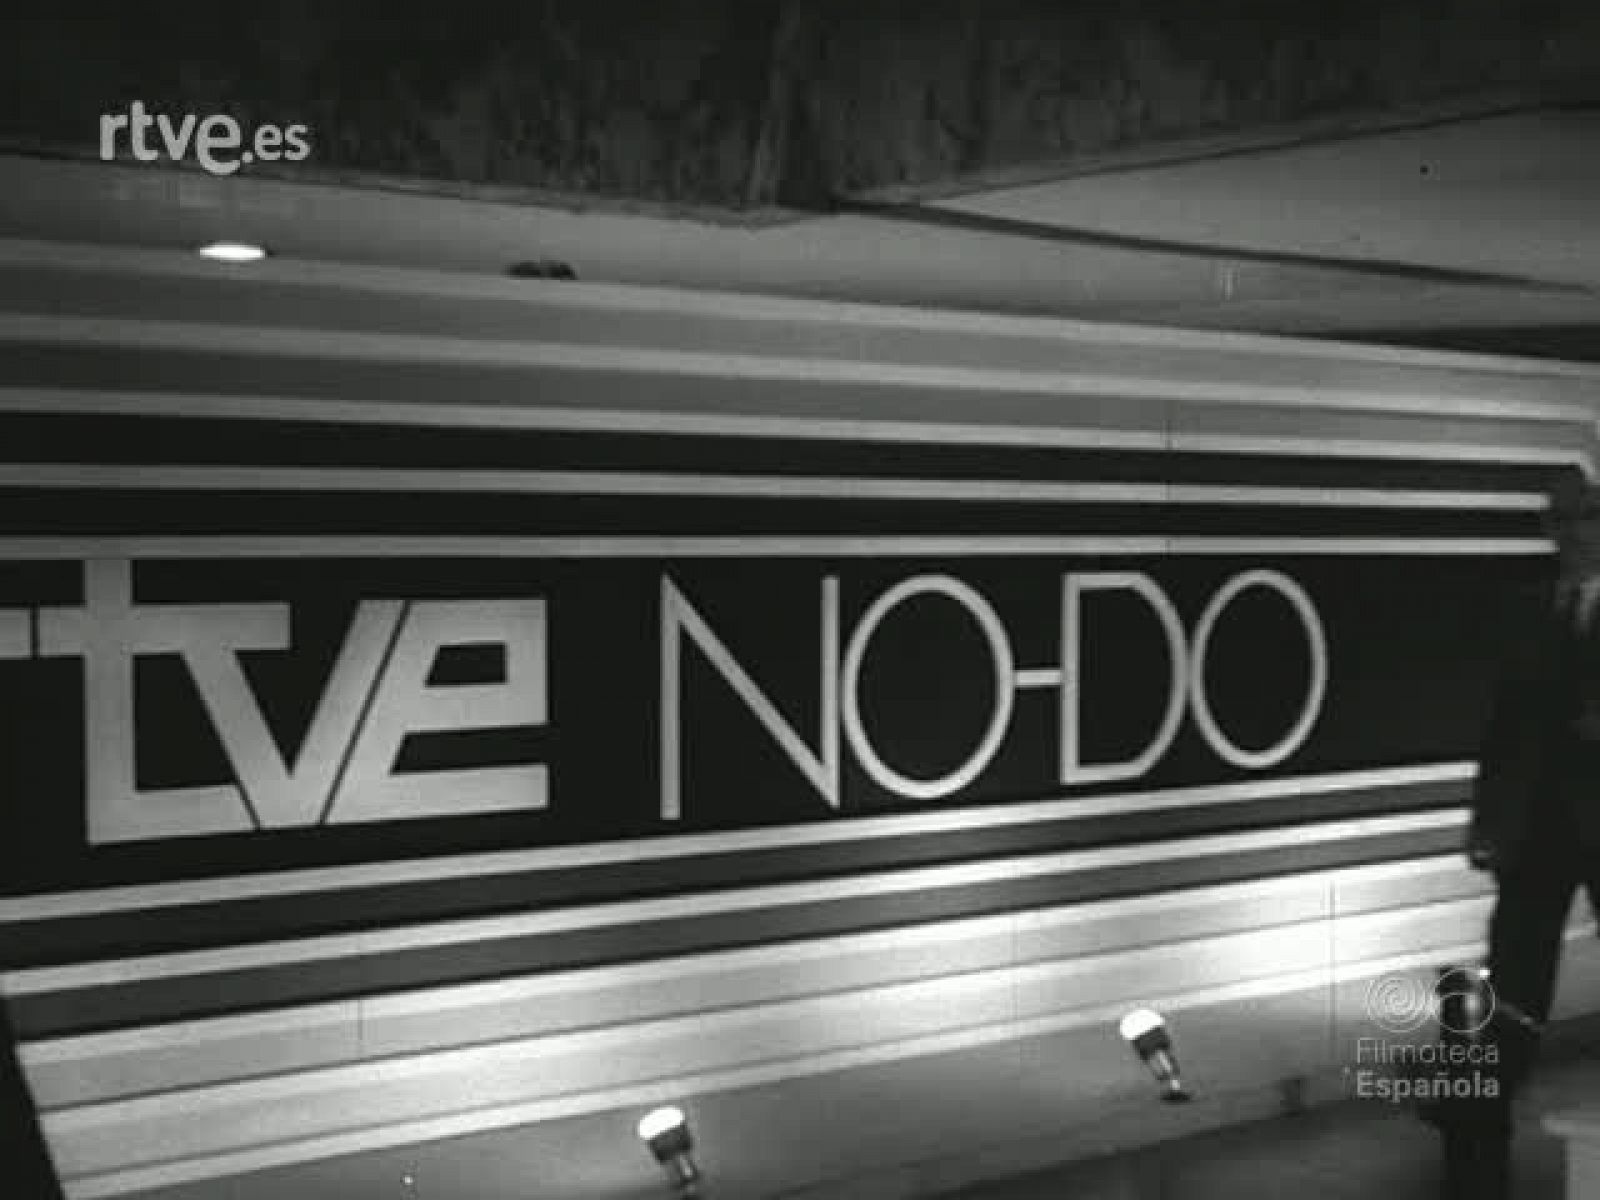 NODO: NOT N 1556 B | RTVE Play